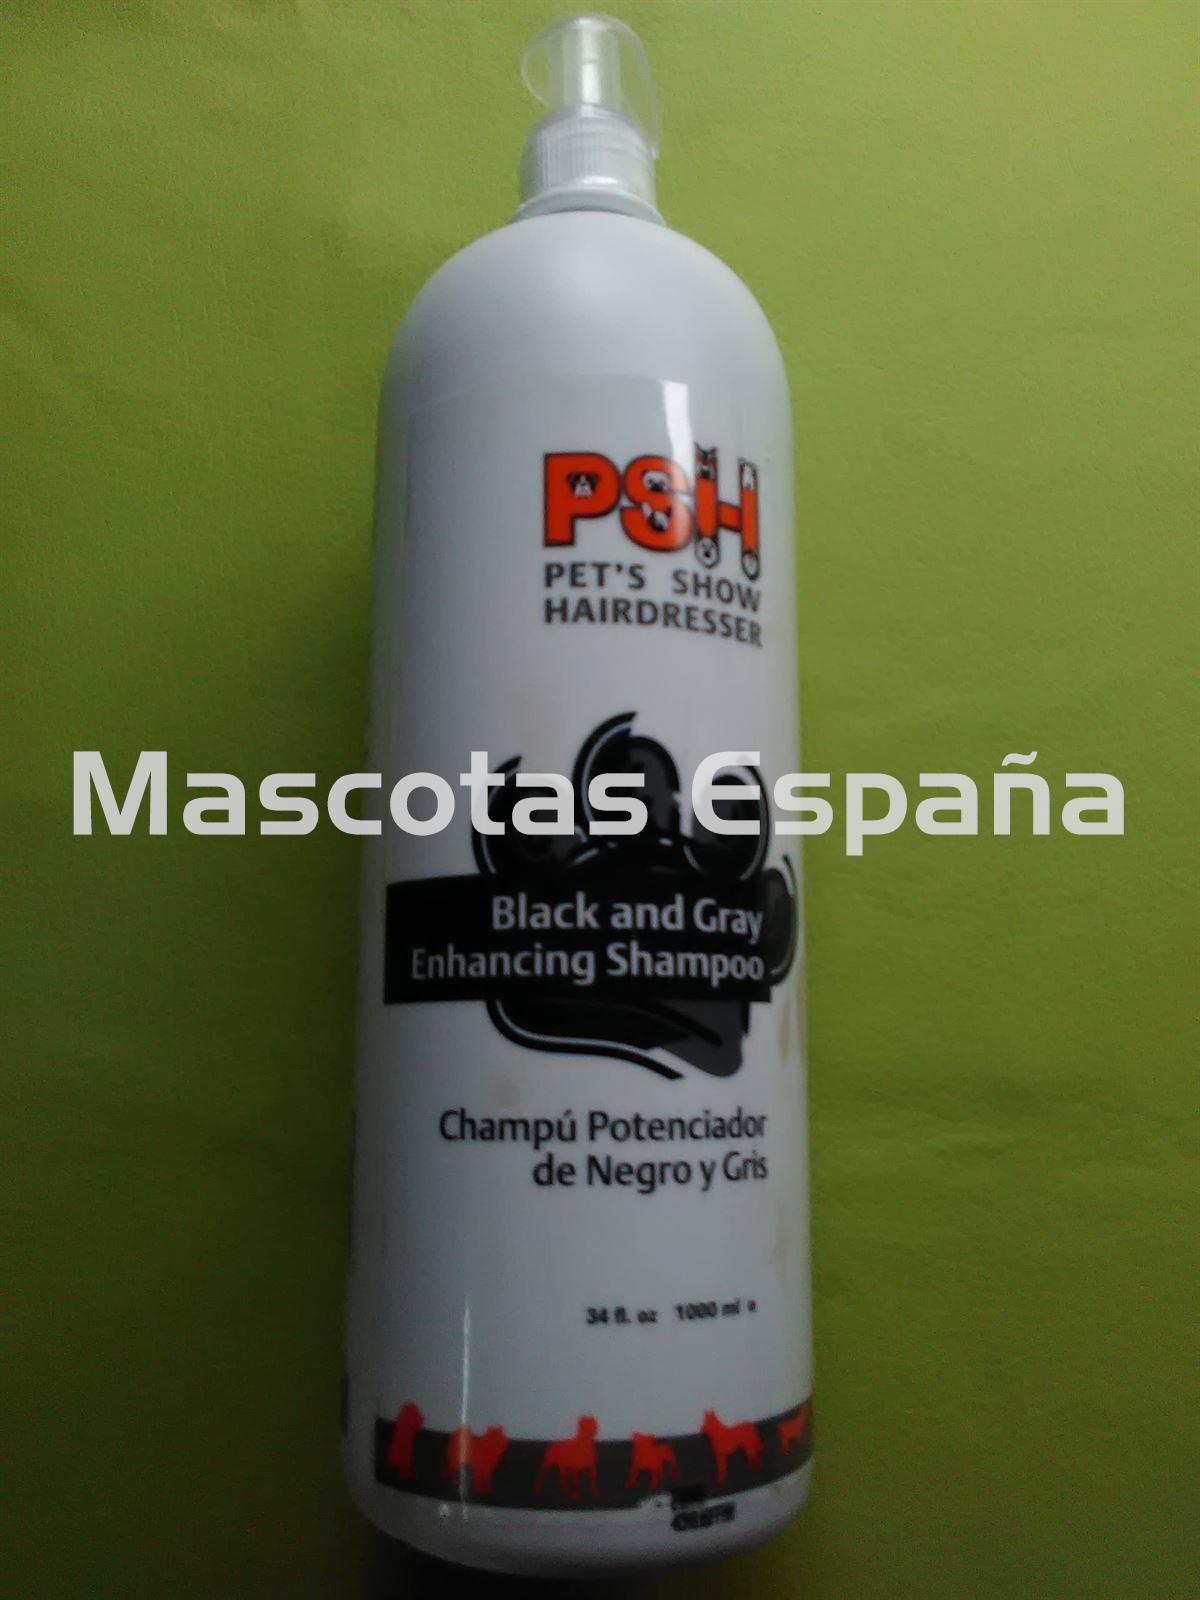 PSH Black and Gray Enhancing Shampoo (Champú Potenciador de Negro y Gris) 1L - Imagen 1